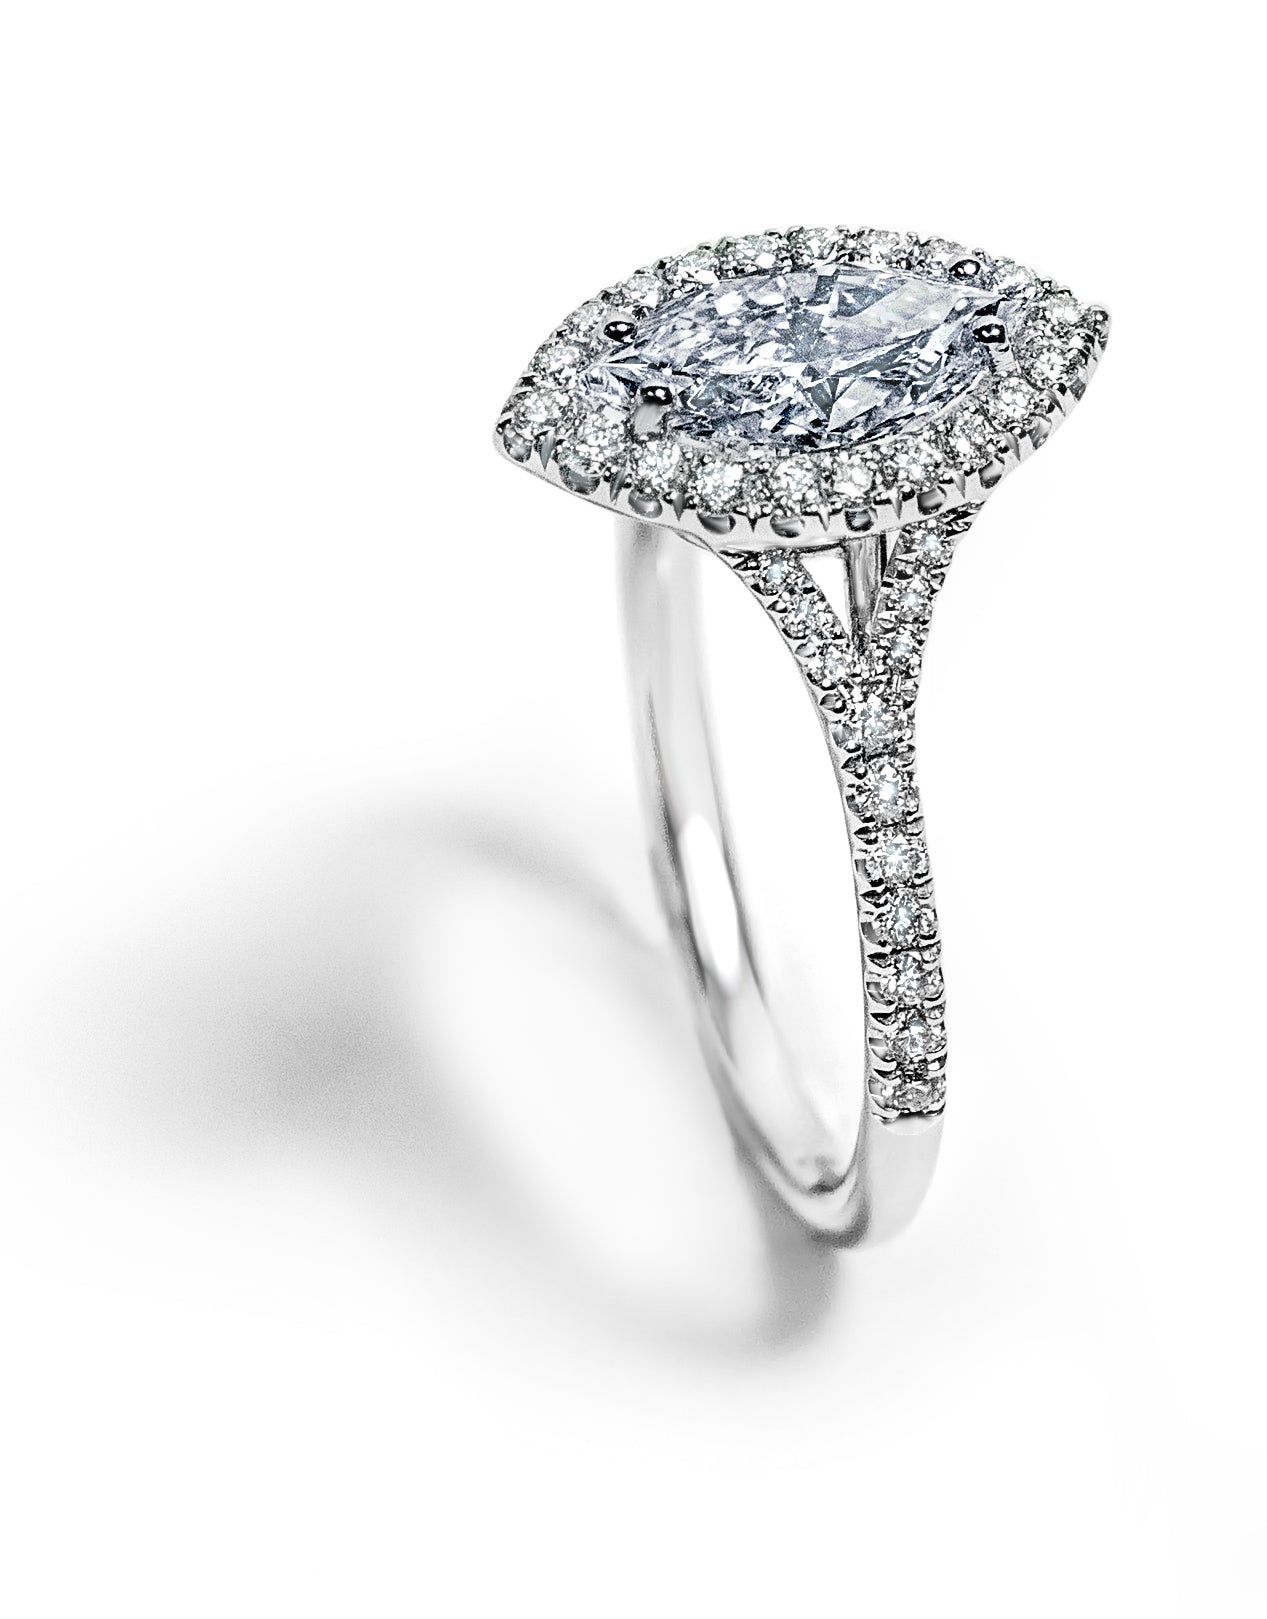 "Jacqueline" Engagement Ring